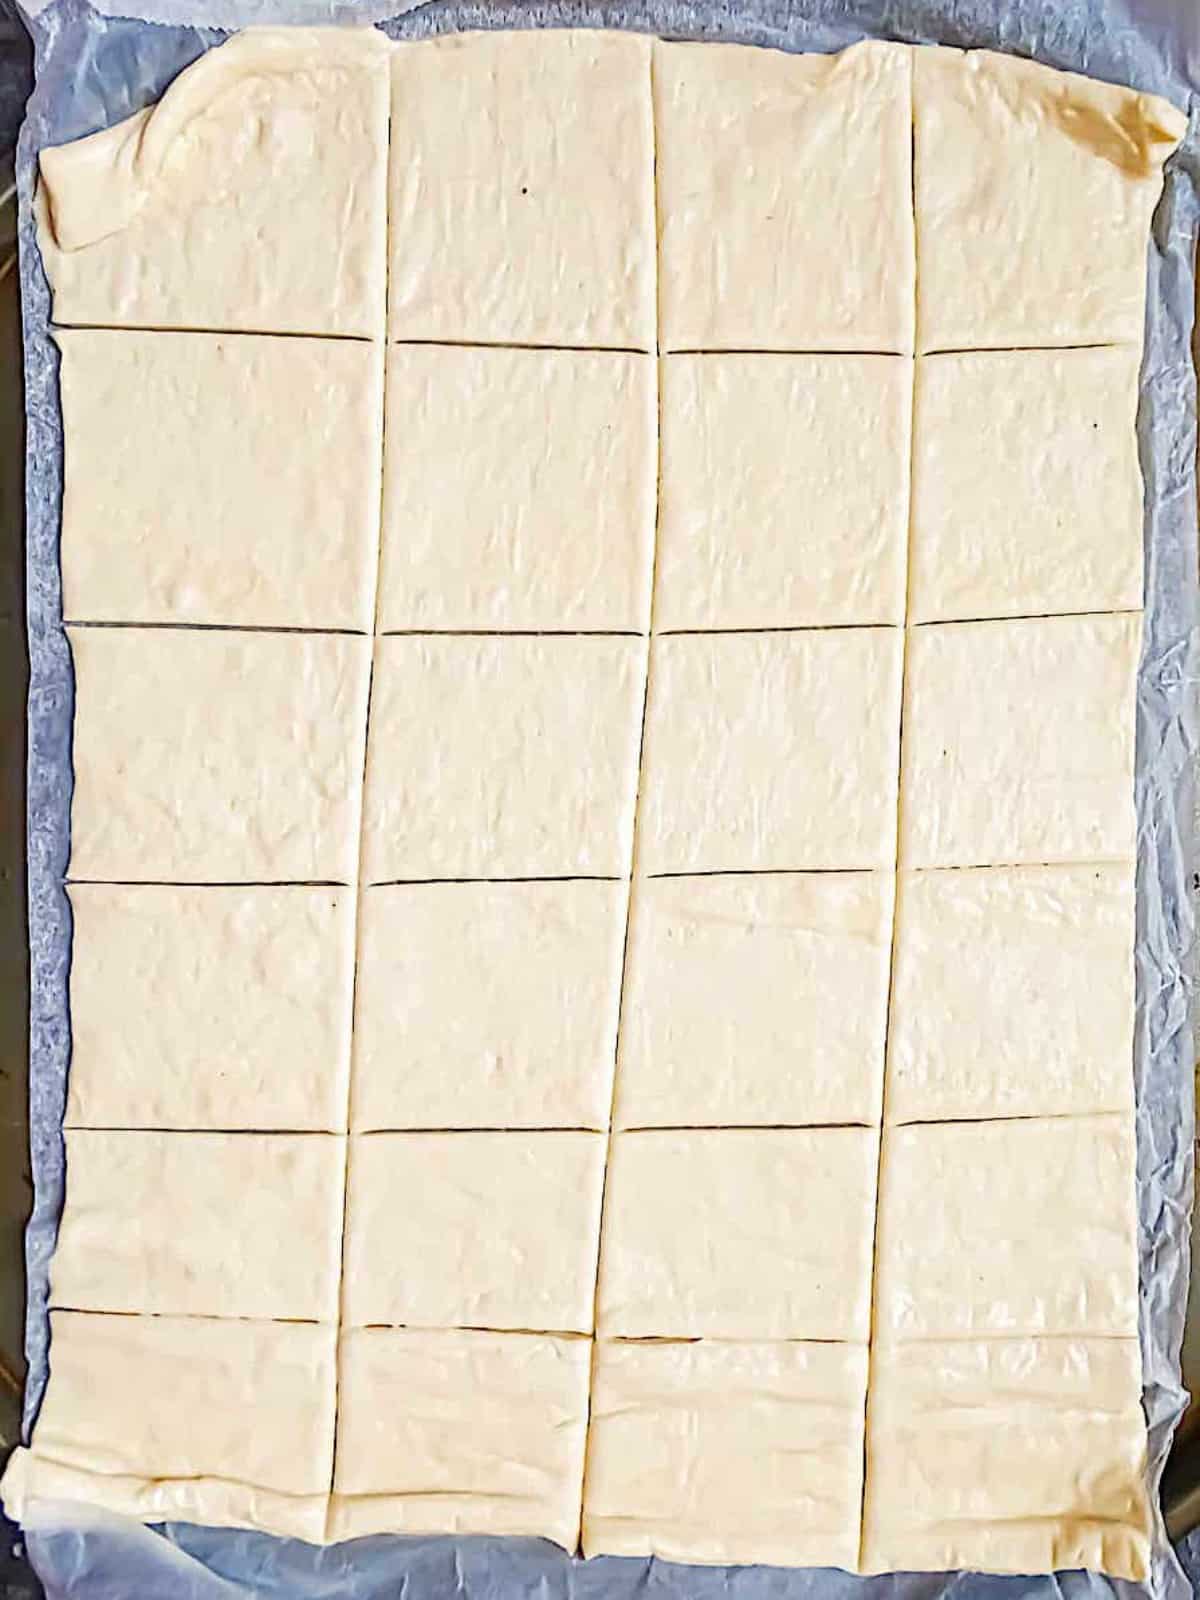 pizza dough spread onto a baking sheet and cut into pieces
